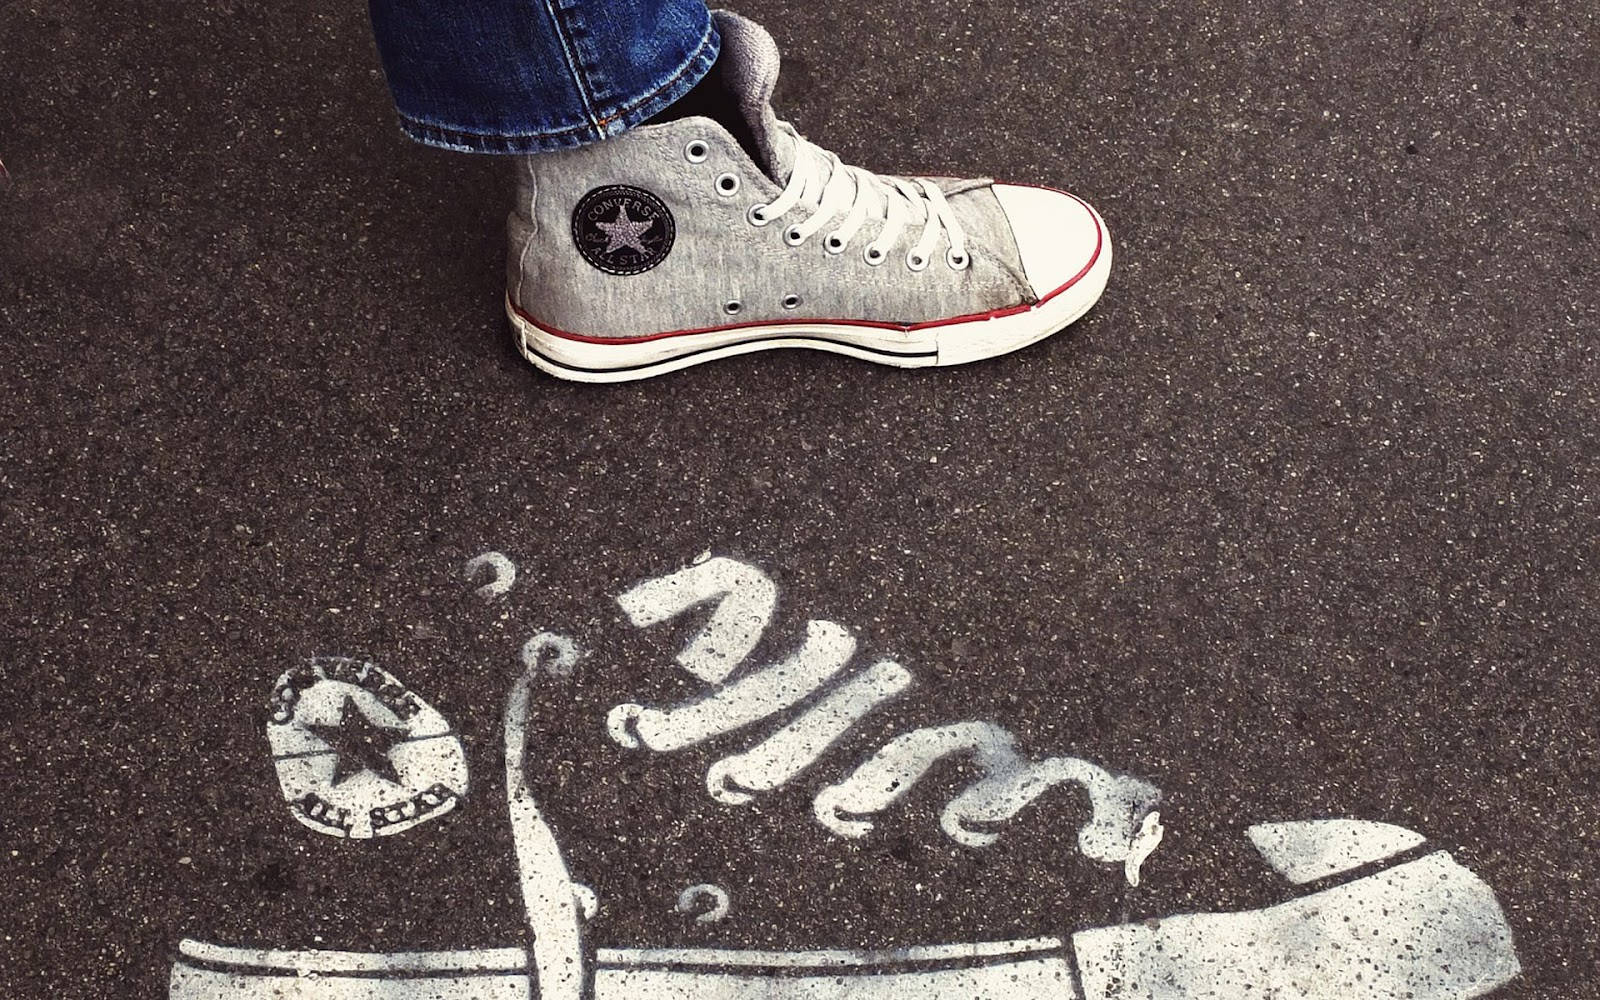 Caption: Stylish Converse Sneaker Artwork On Chalkboard Background Wallpaper